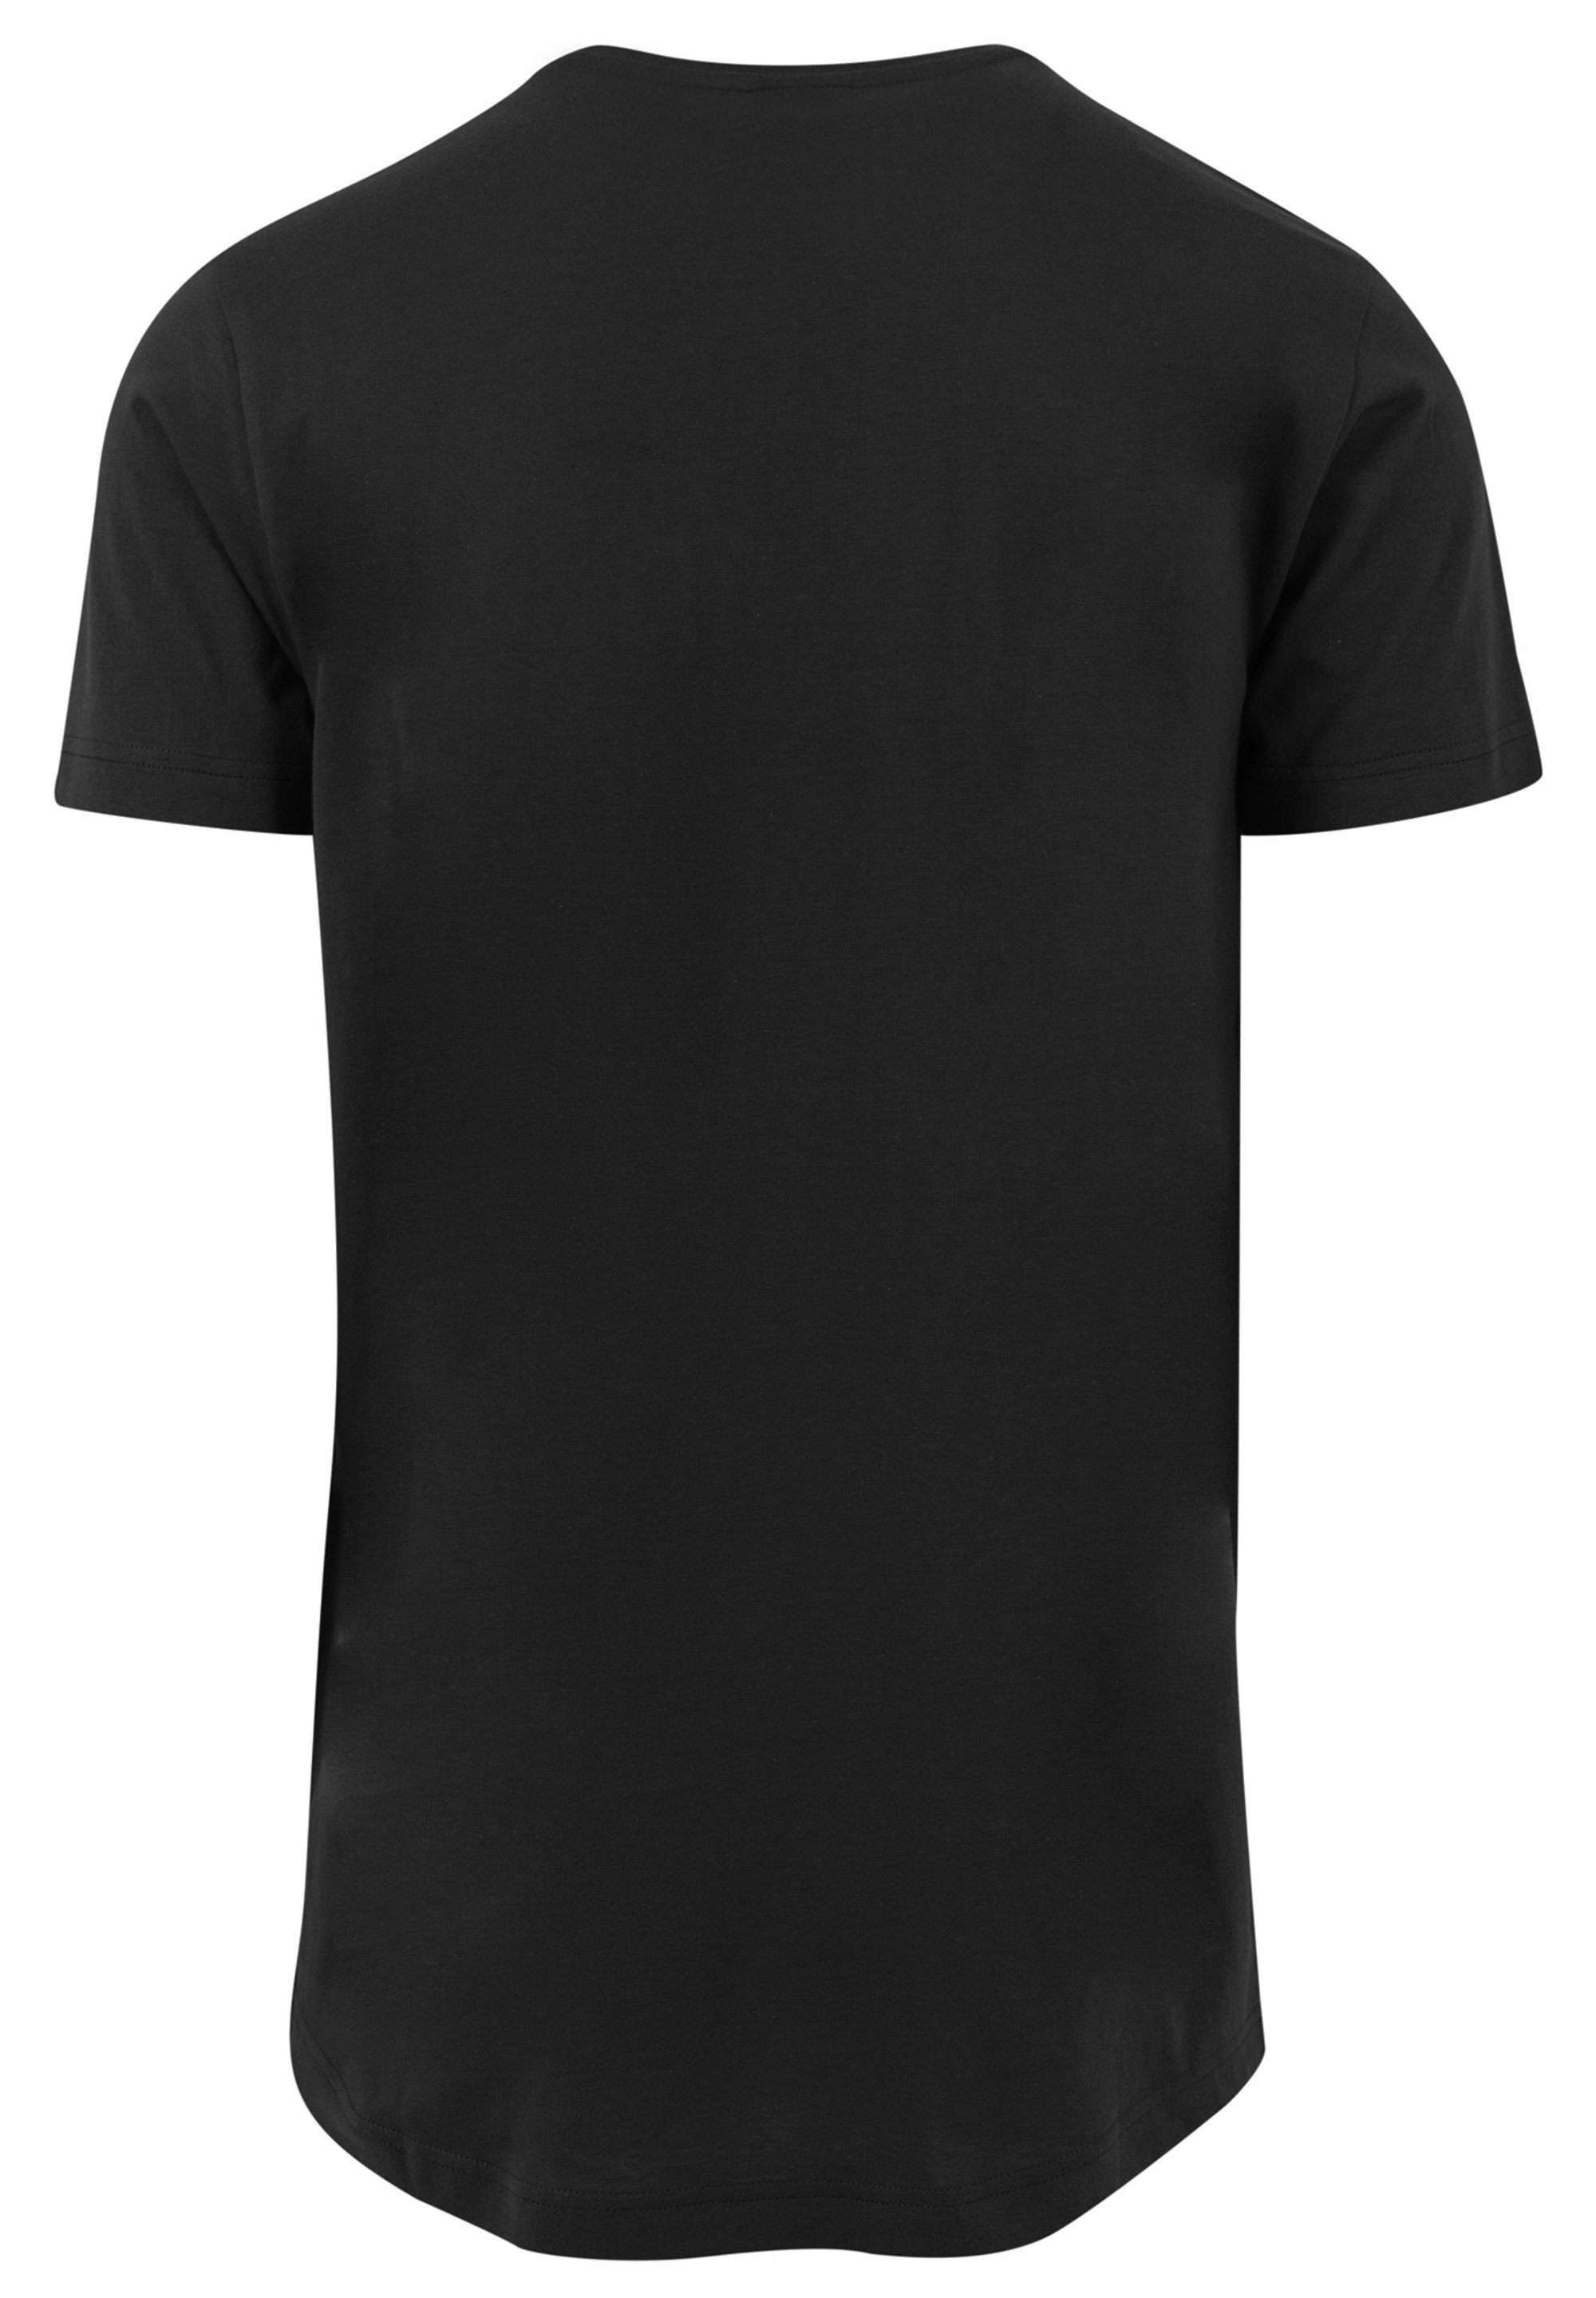 Long Mandalorian F4NT4STIC T-Shirt Is The Print Way' Shirt Wars T This Cut 'Star